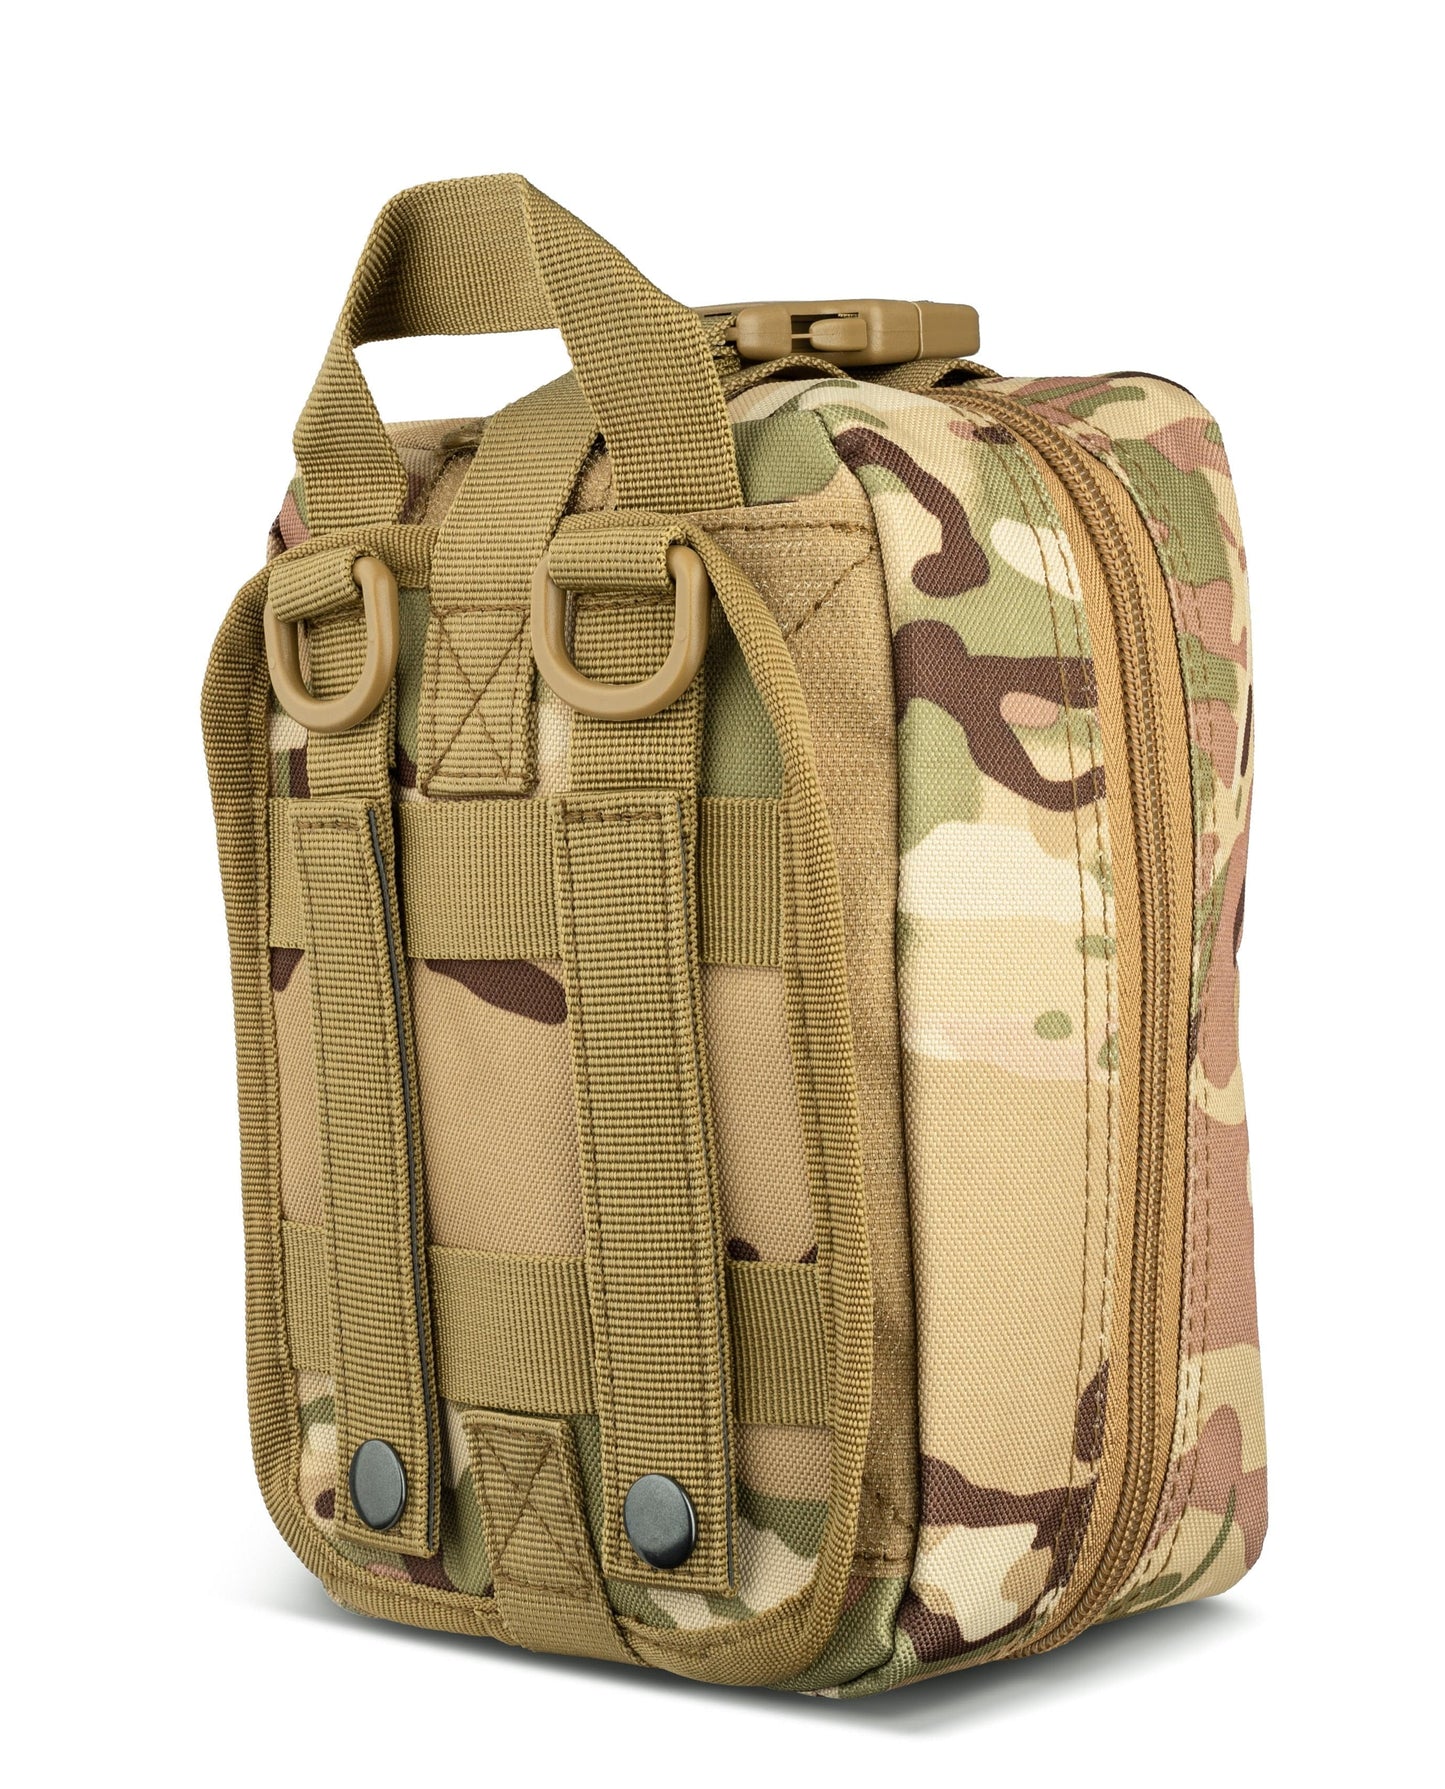 Chief Miller First Aid Kits Scherber Premium IFAK Kit Trauma Pack - Fully Stocked Apparel